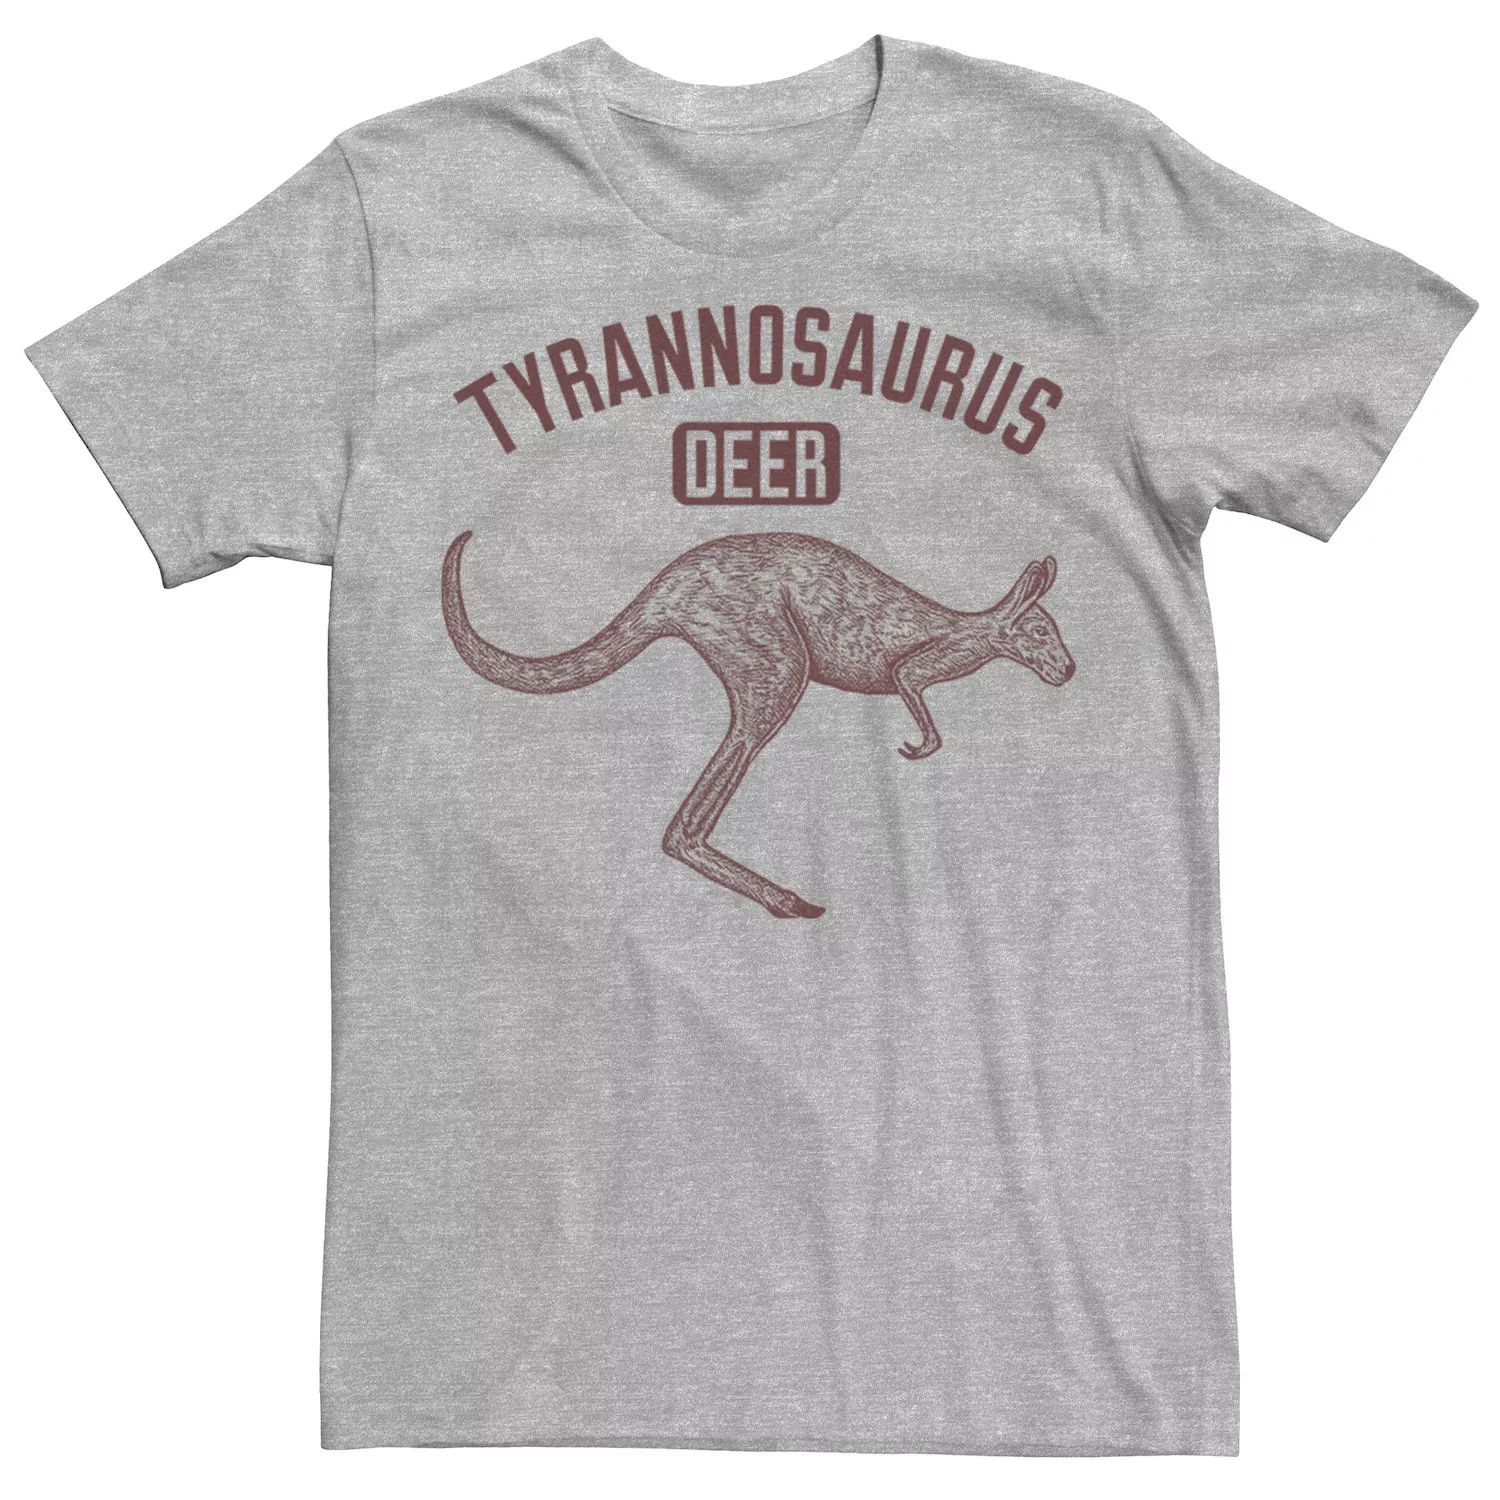 Мужская забавная футболка с тираннозавром и кенгуру Licensed Character